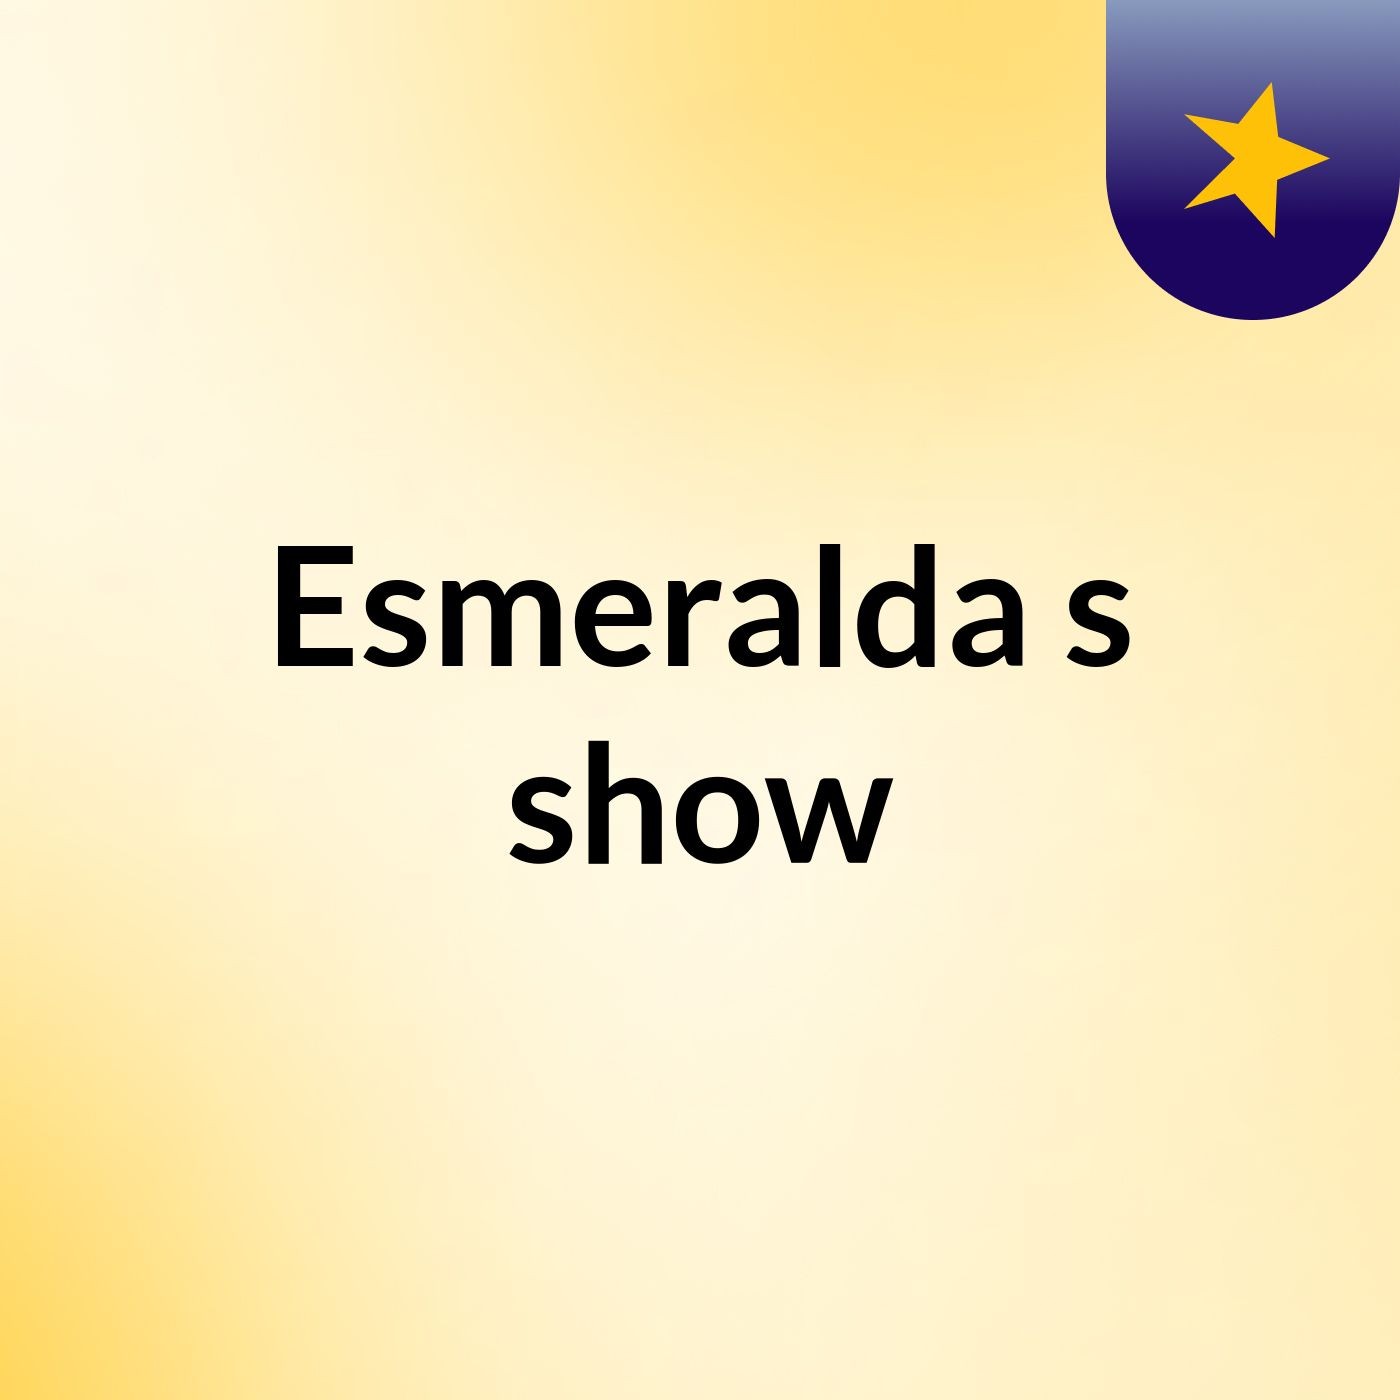 Esmeralda's show